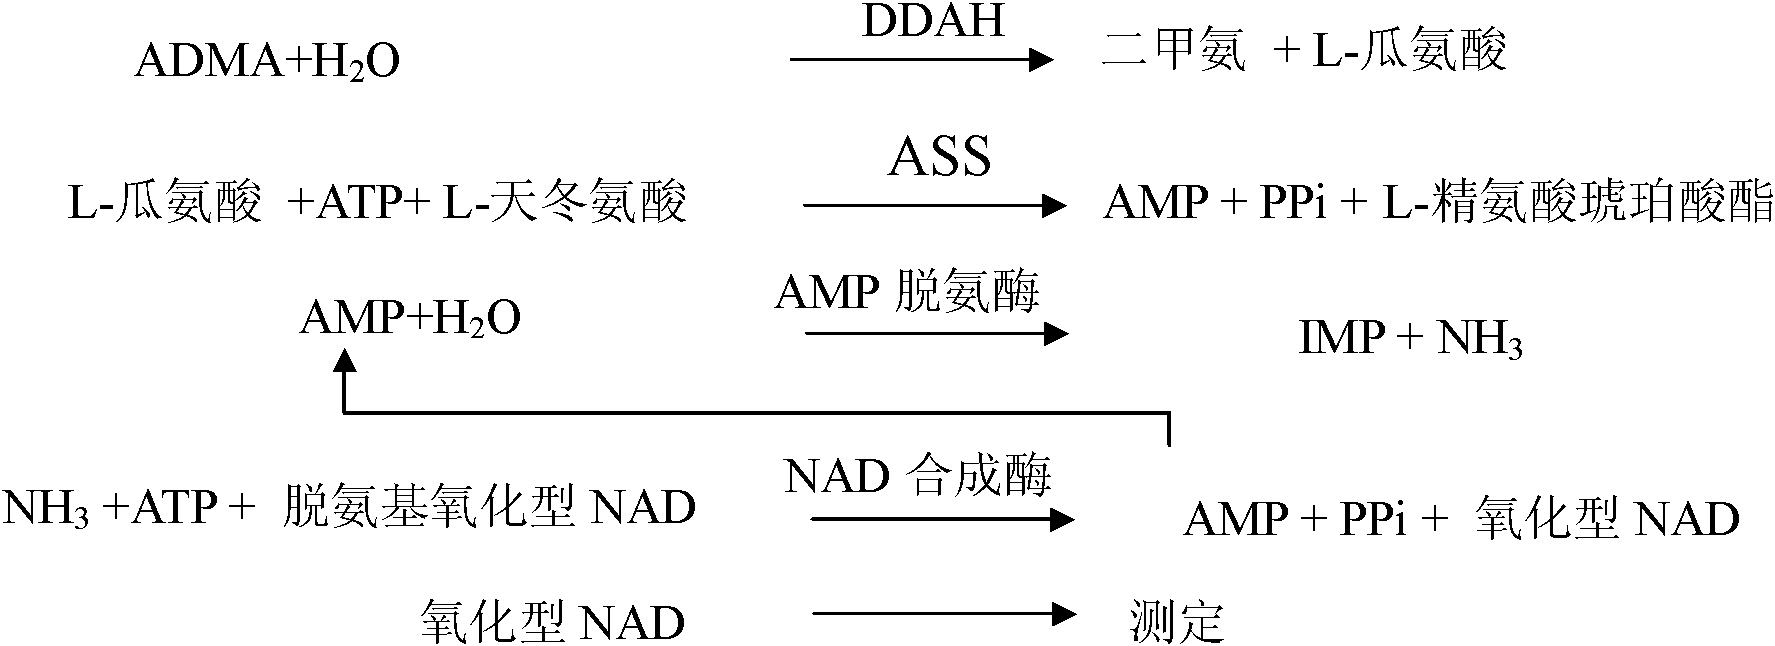 Method for measuring concentration of asymmetric dimethylarginine and diagnostic reagent kit